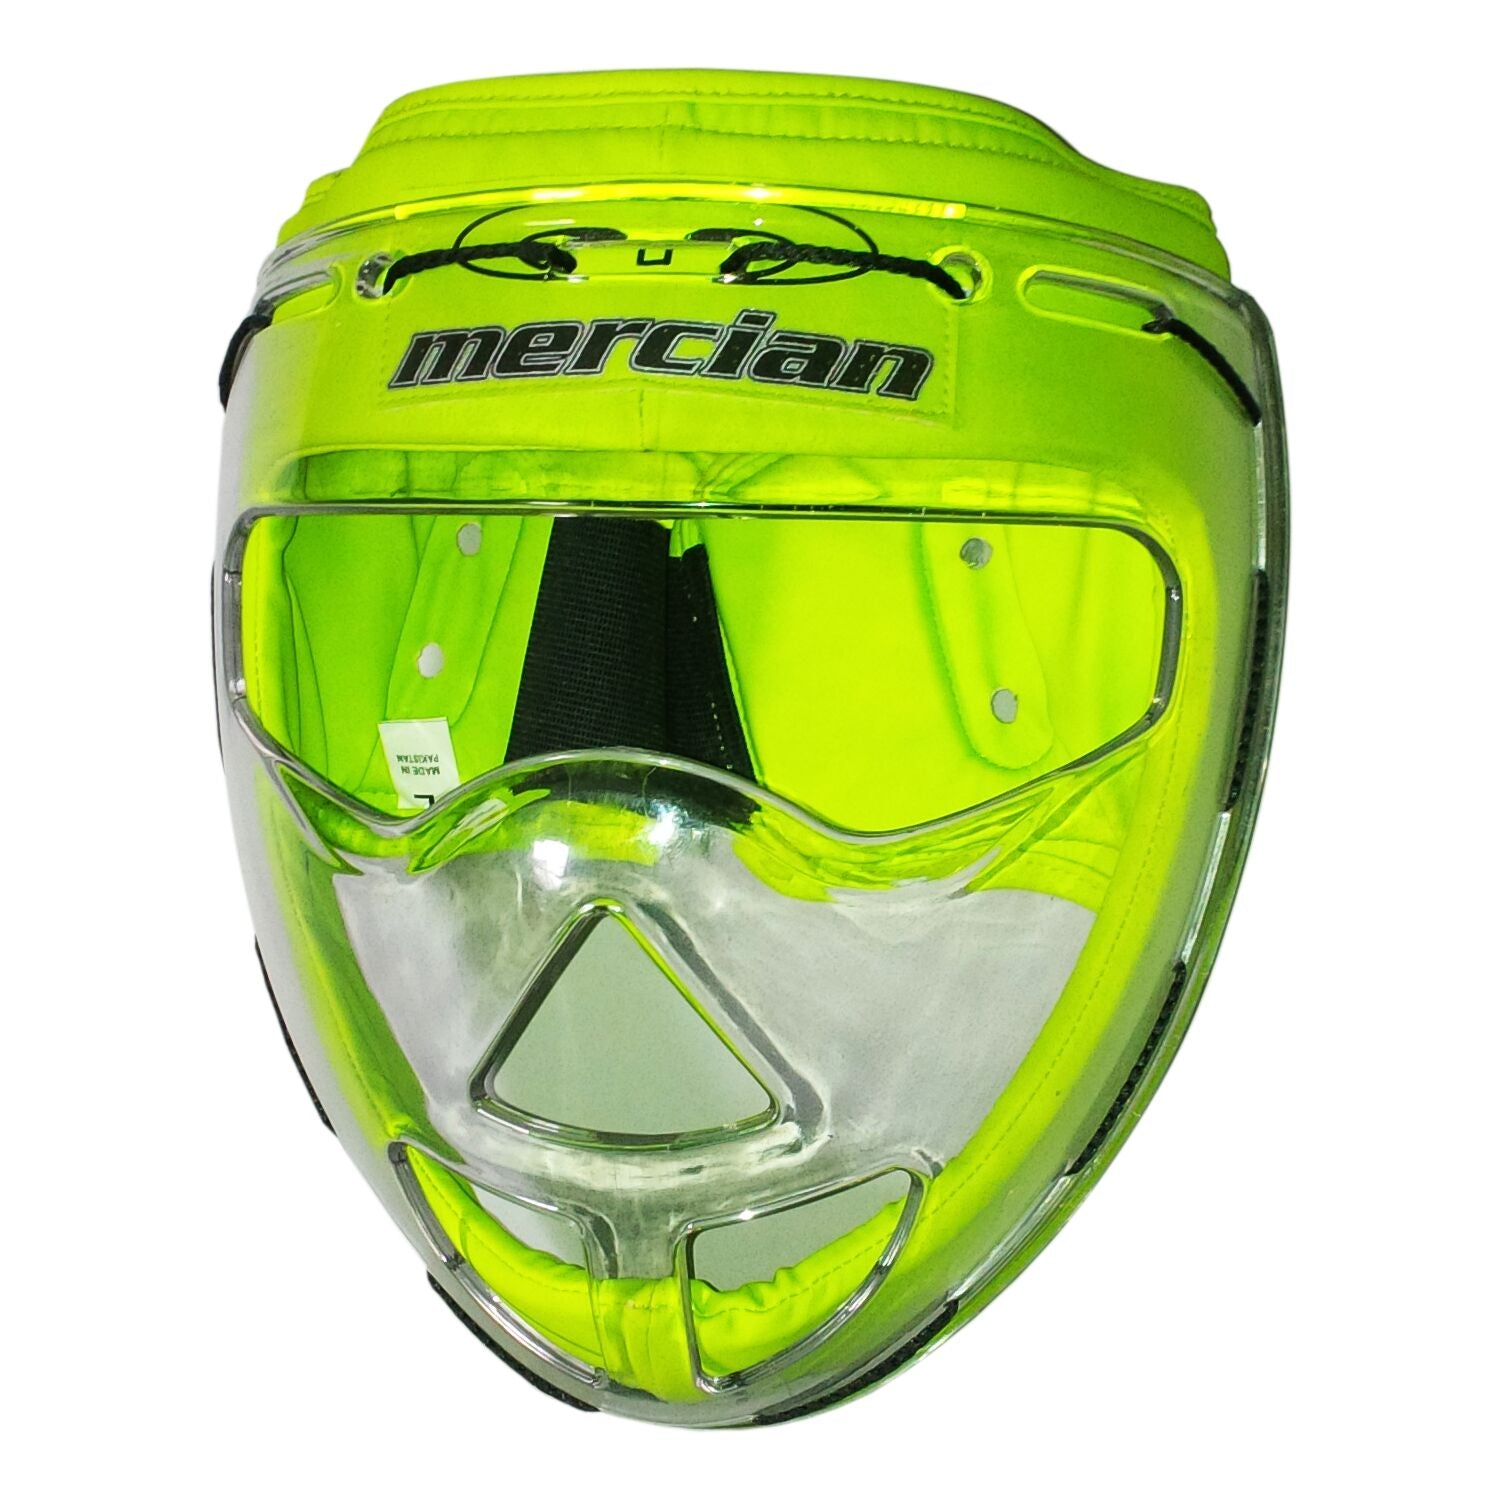 Mercian M-Tec Penalty Corner Mask